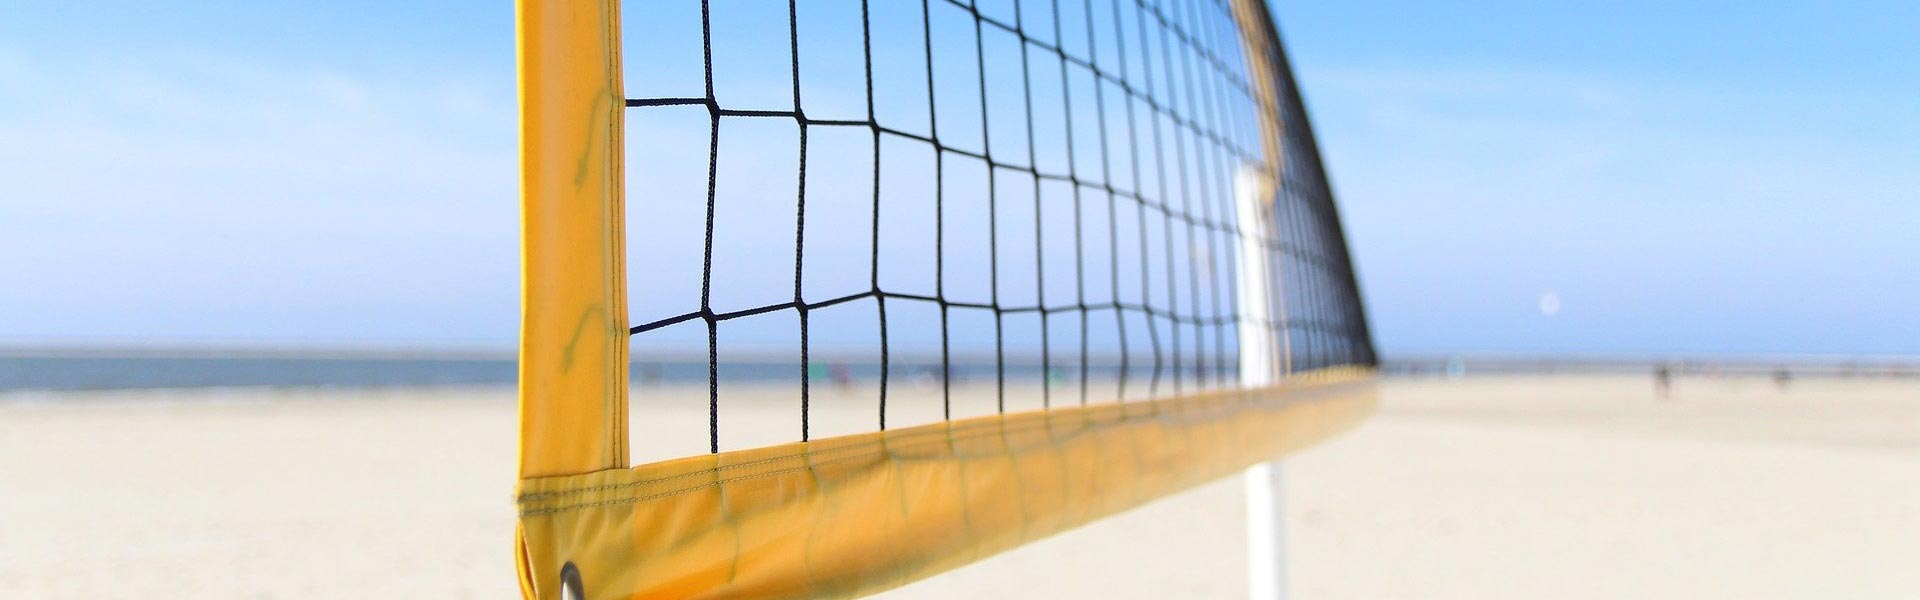 volleybalnet strand